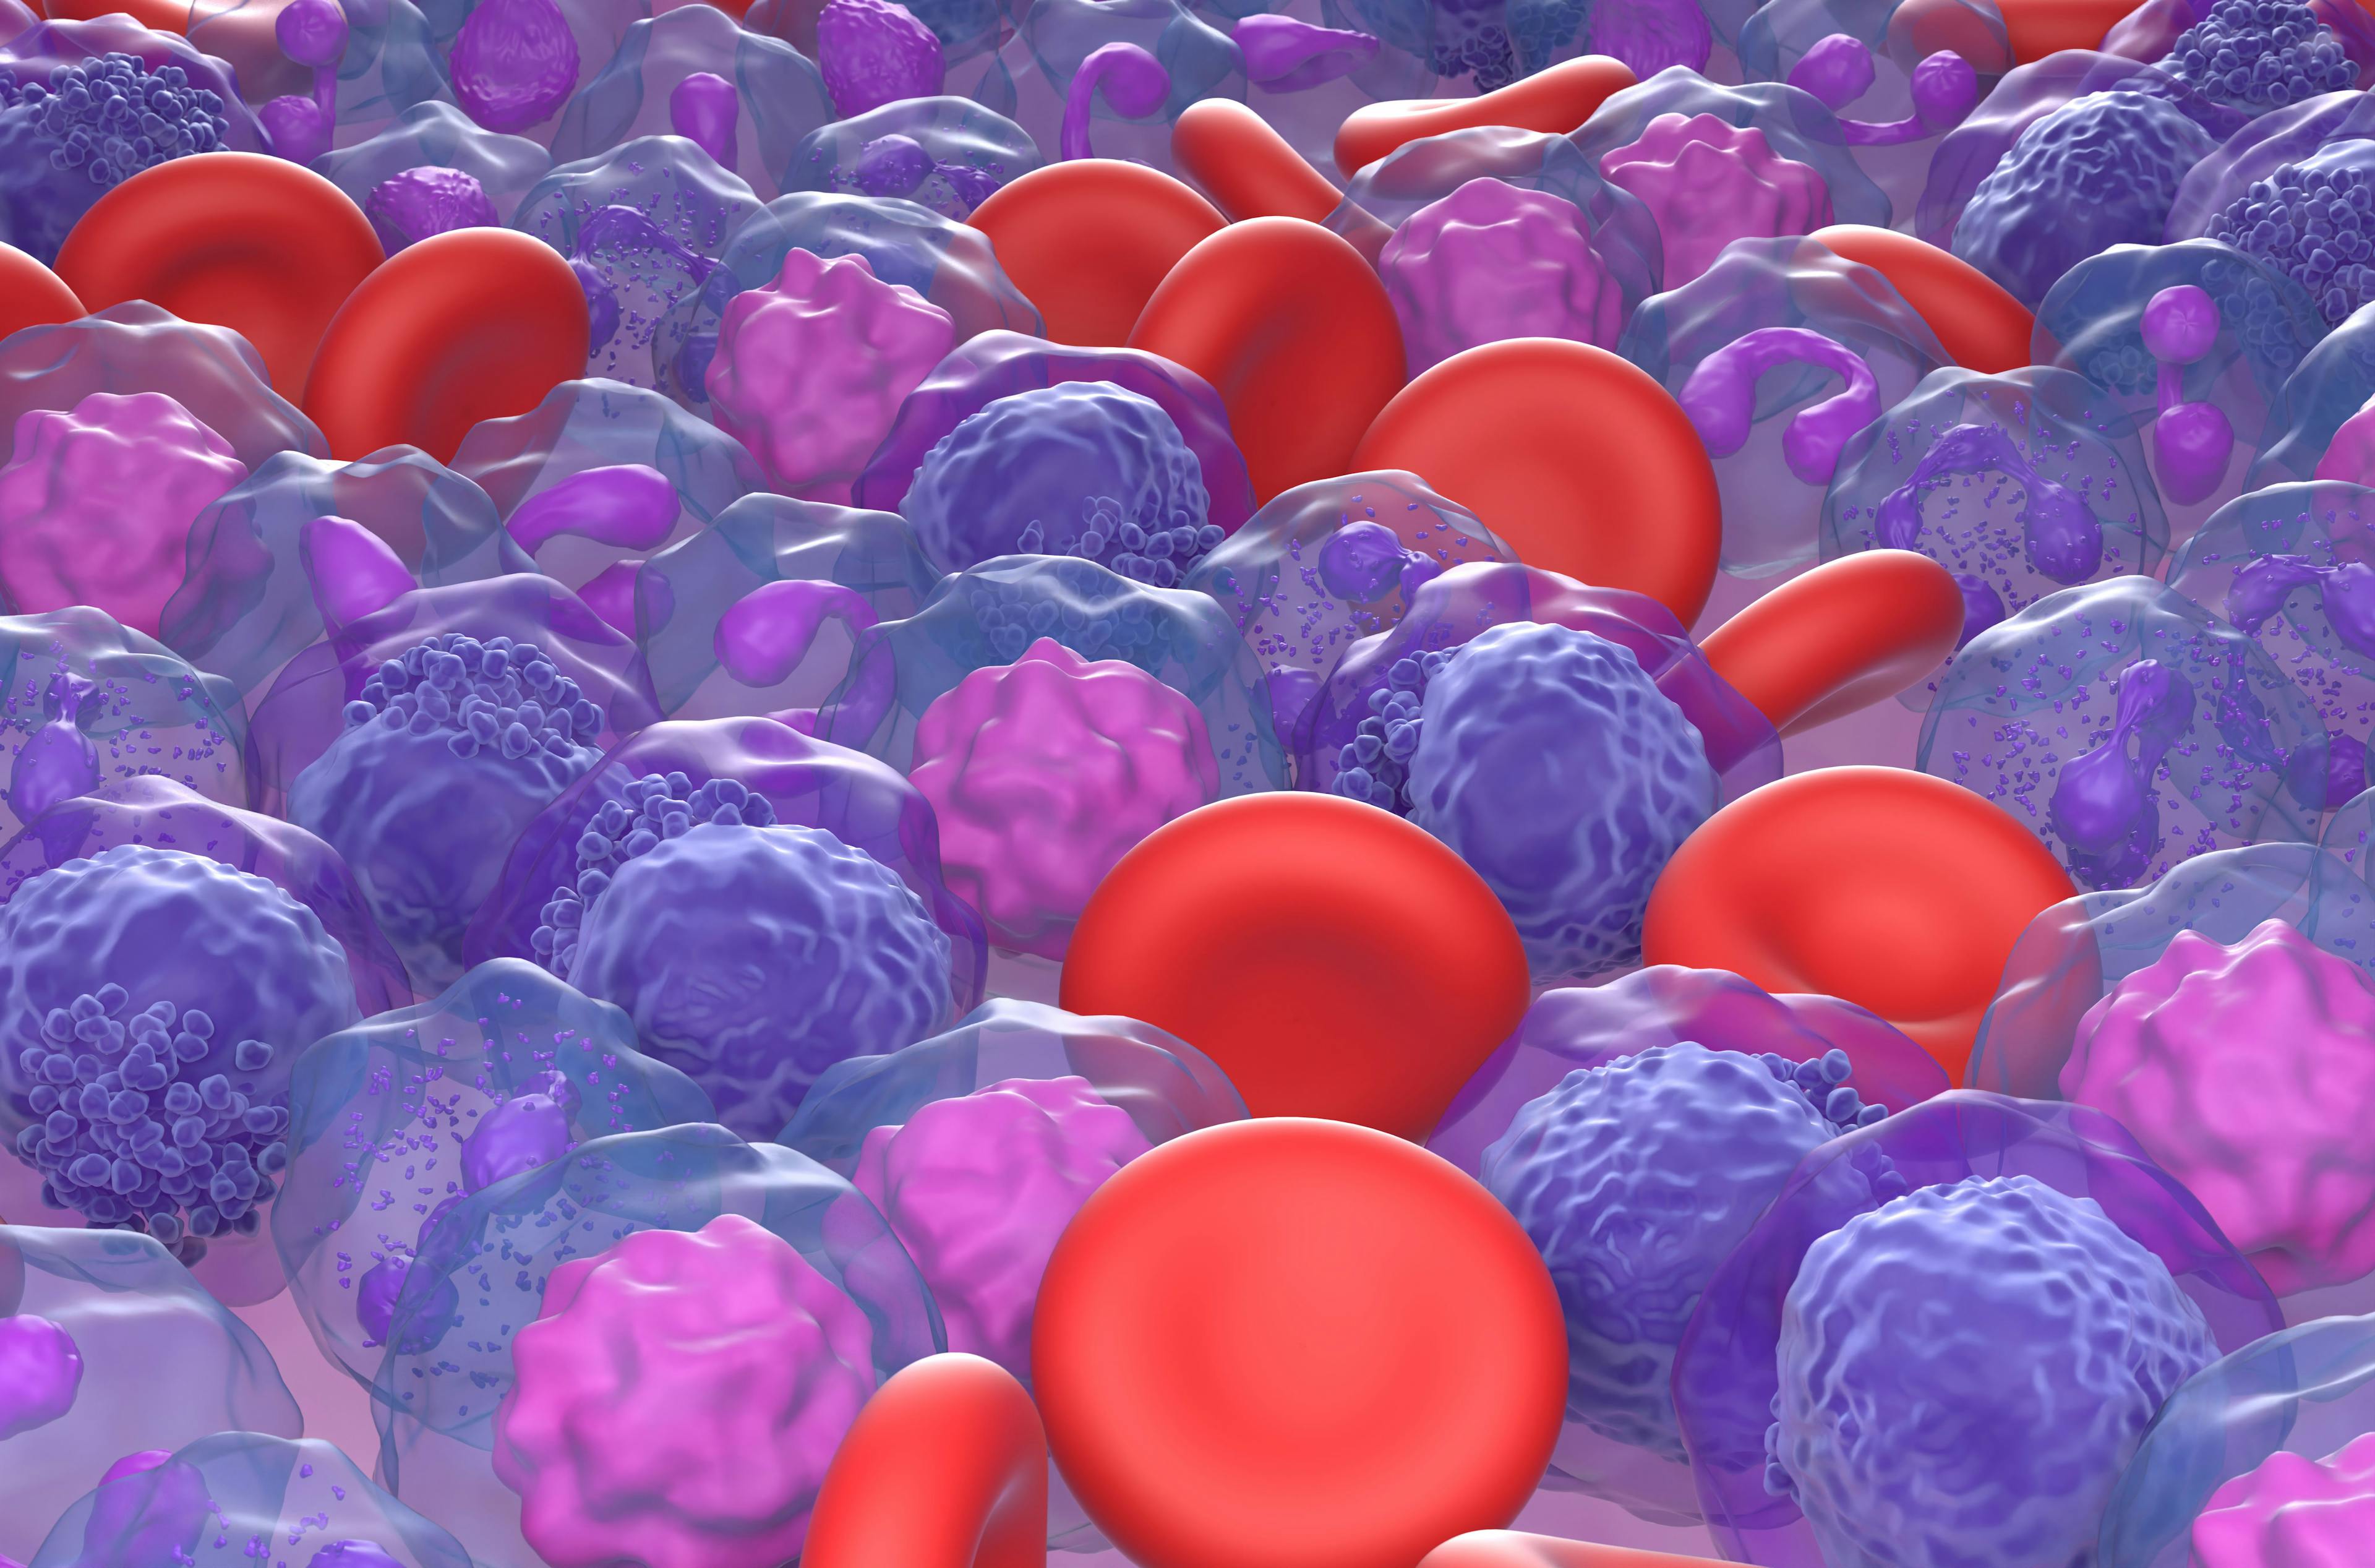 Acute myeloid leukemia cells closeup -- Image credit: LASZLO | stock.adobe.com